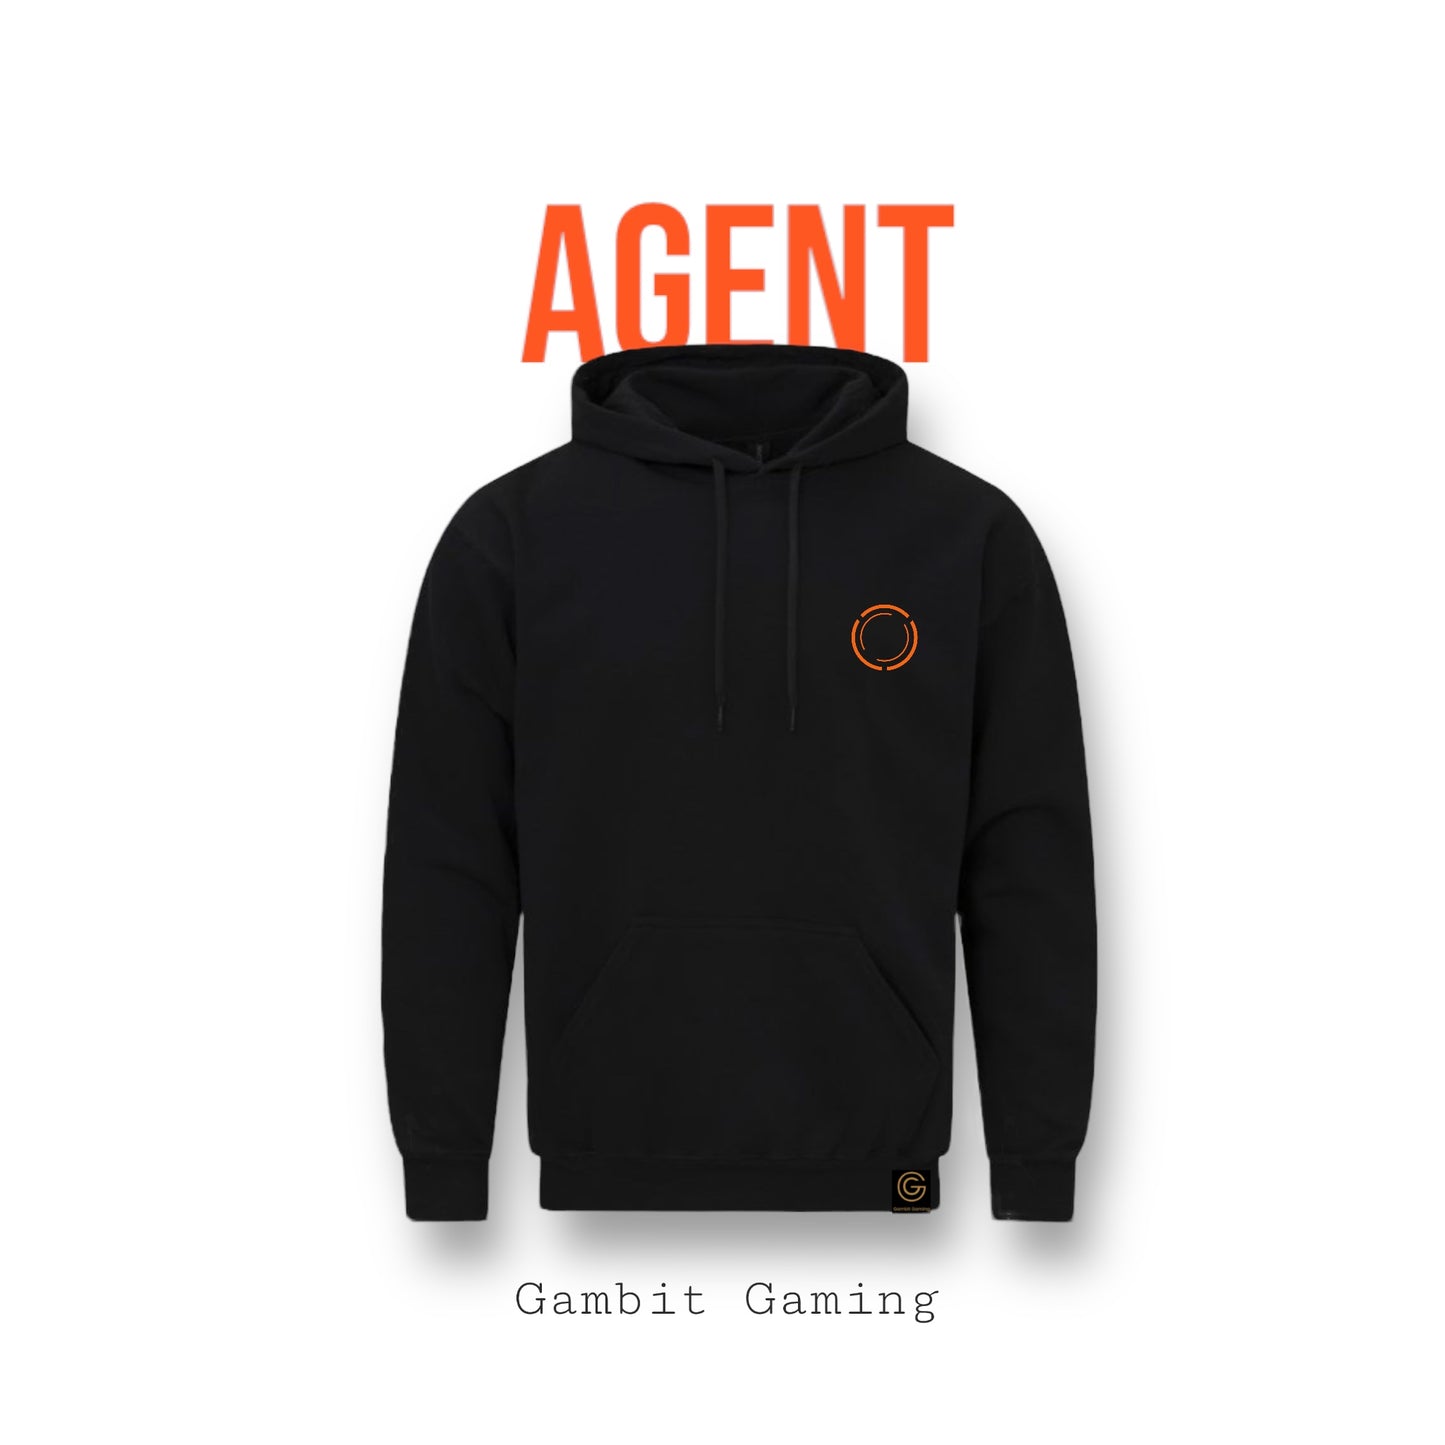 Agent Hoodie - Gambit Gaming